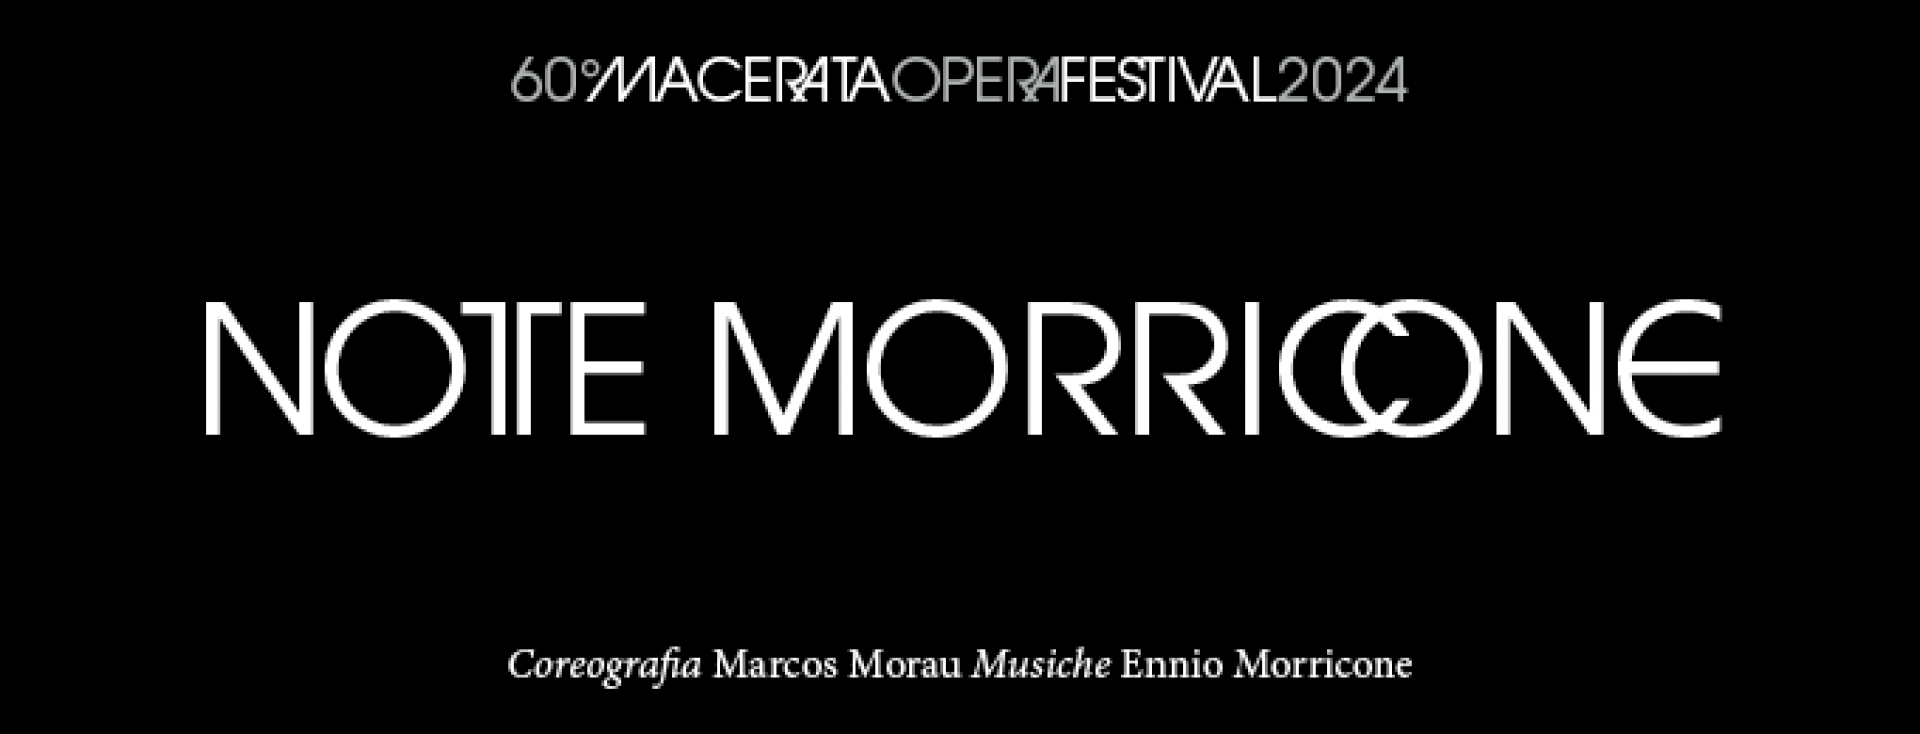 Noche de Morricone -Festival de Ópera de Macerata 2024